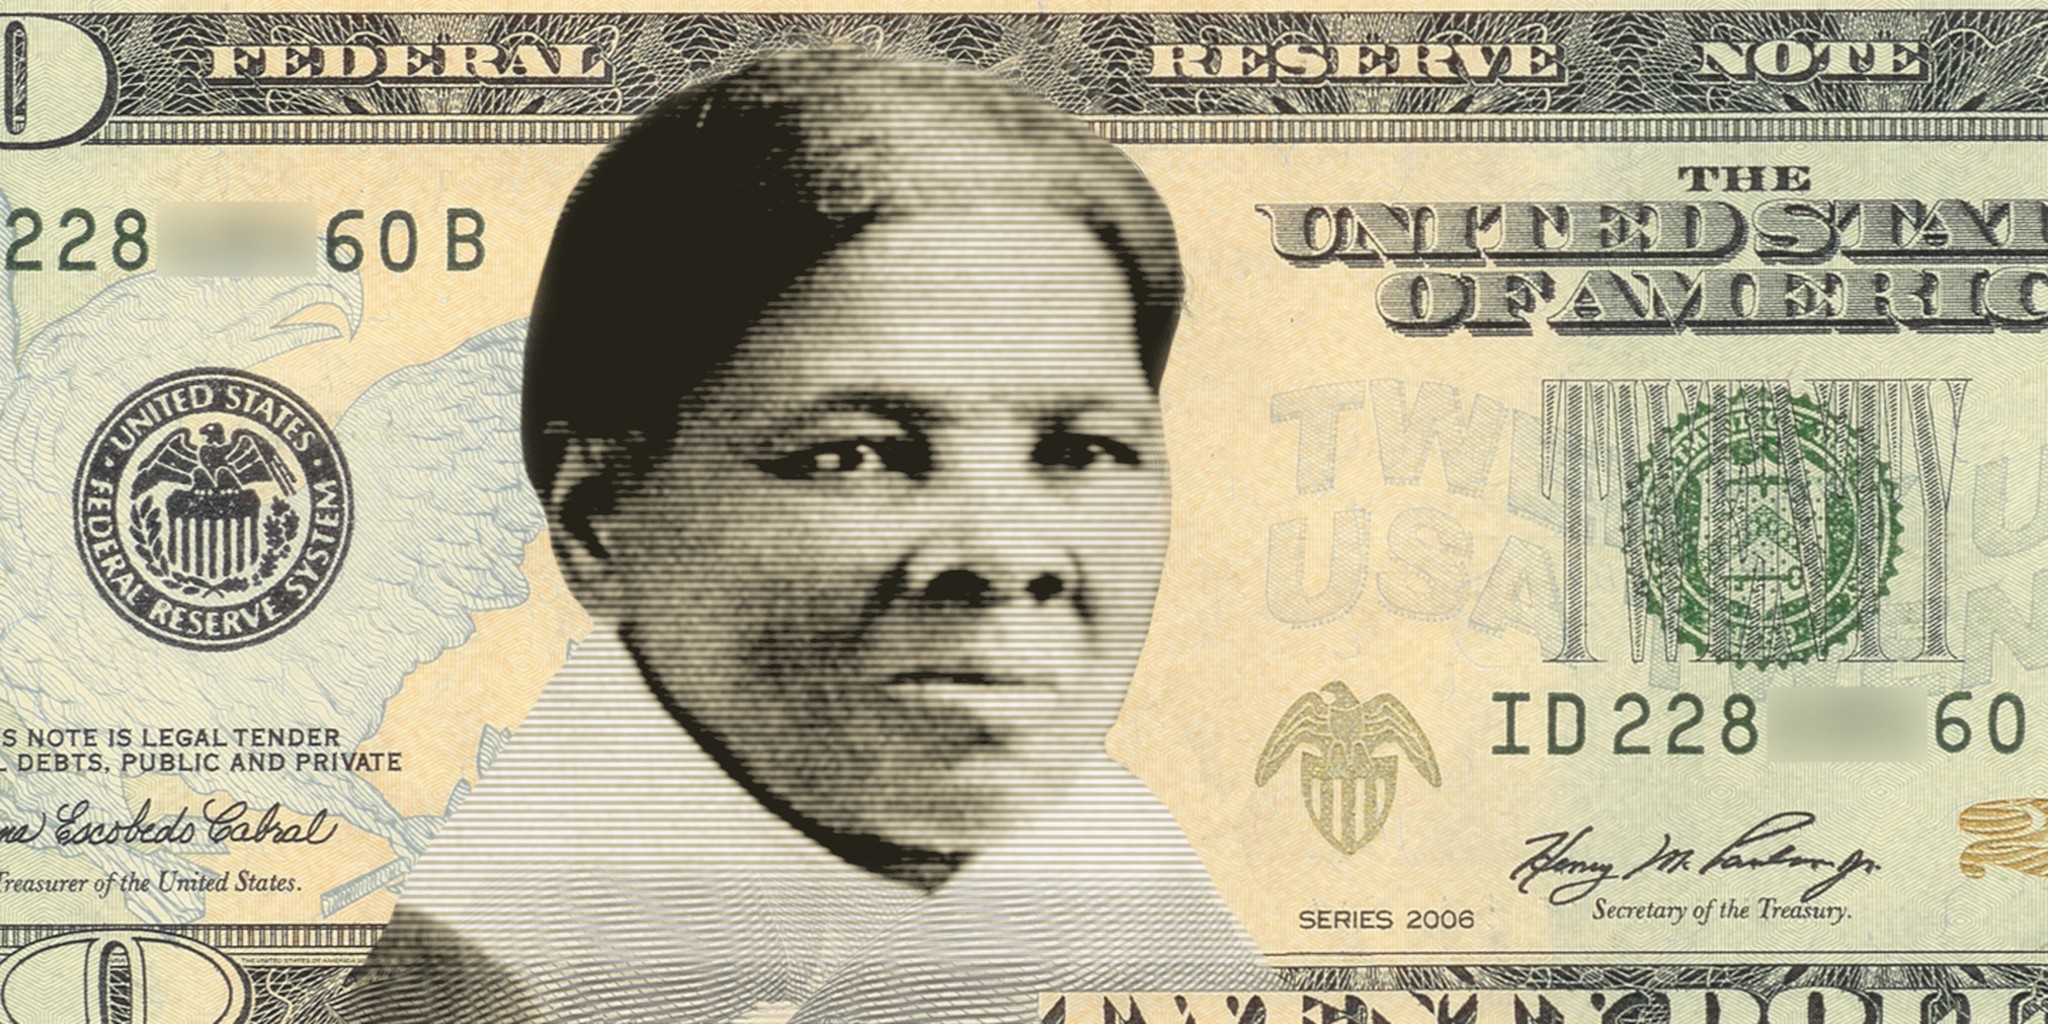 U.S. Treasury announces new $20 bill will depict Harriet Tubman